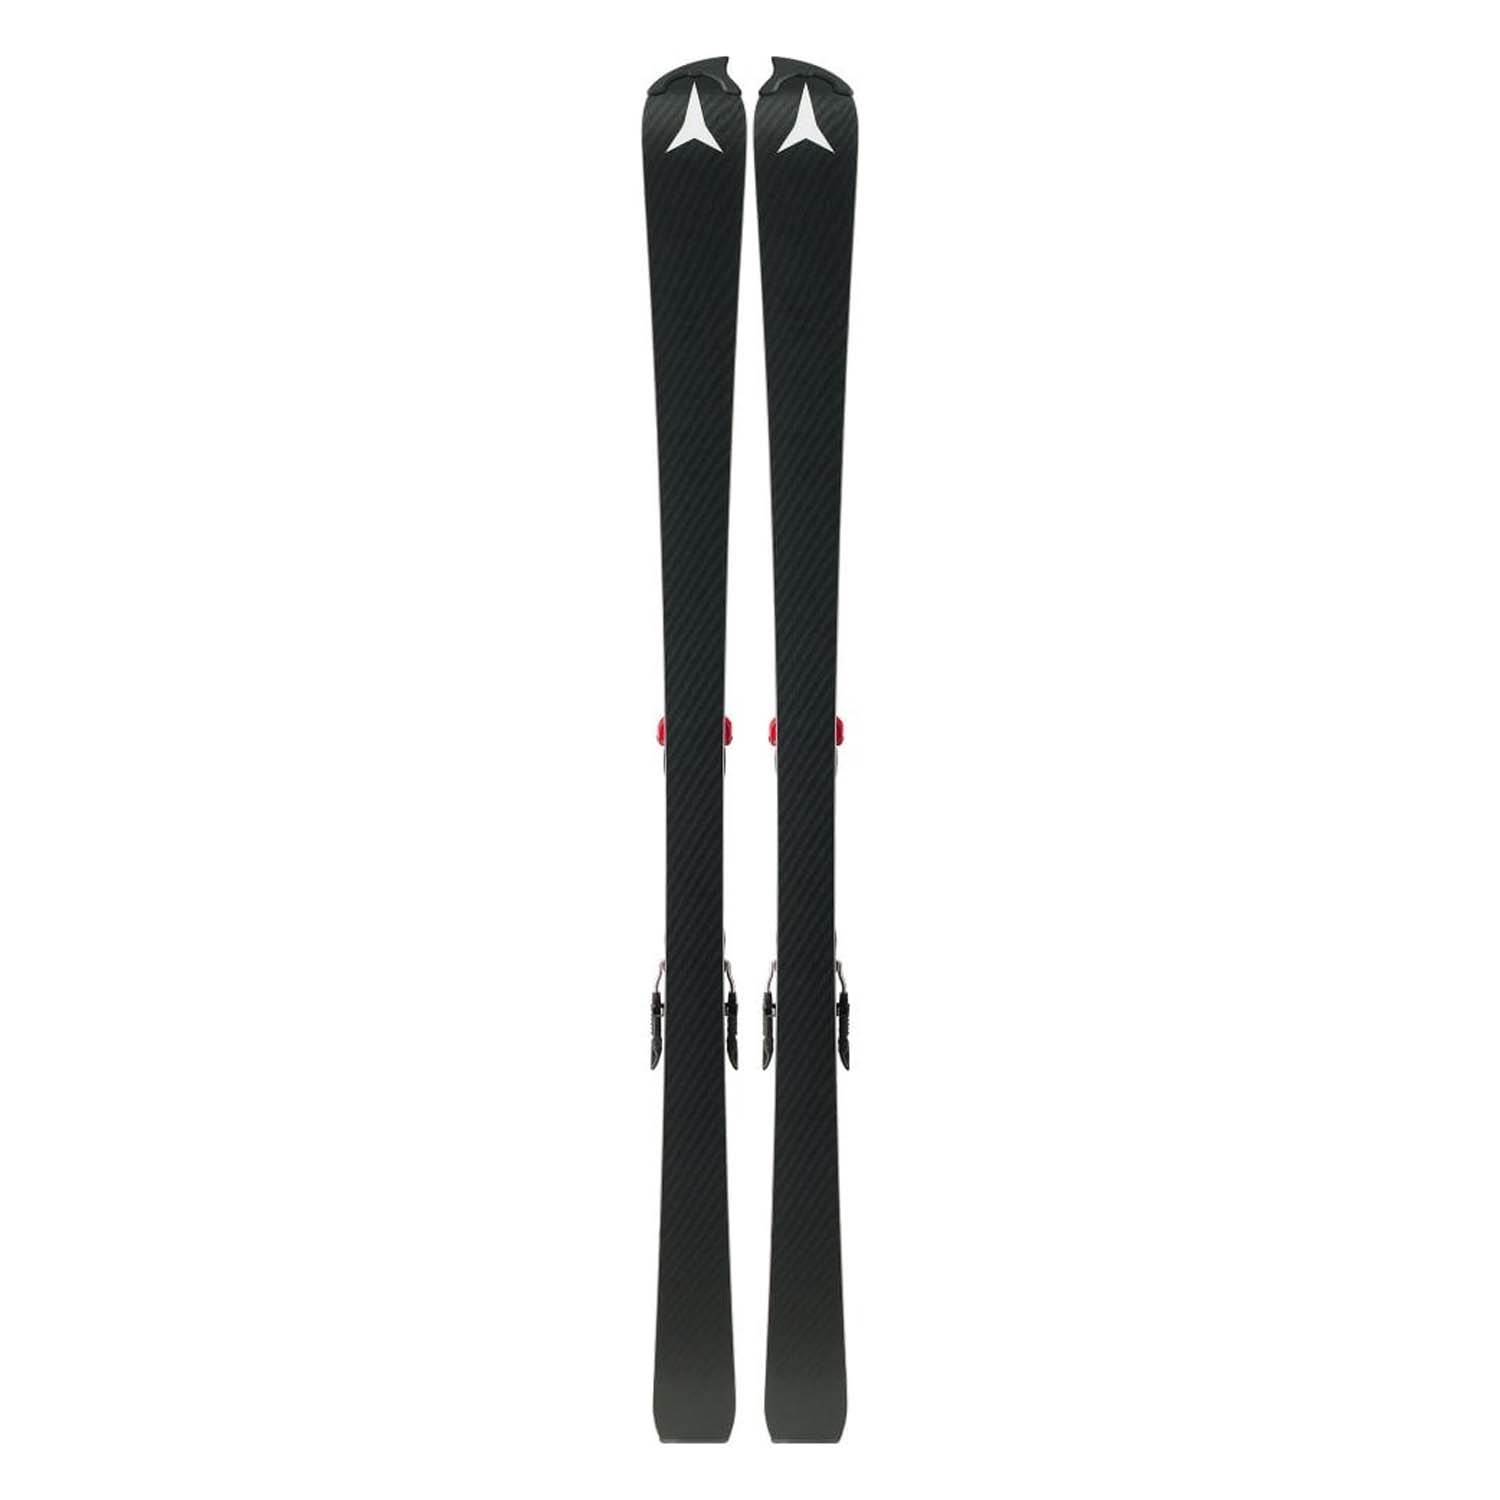 Atomic Redster S9 FIS JRP Skis Colt 7 Bindings 2022